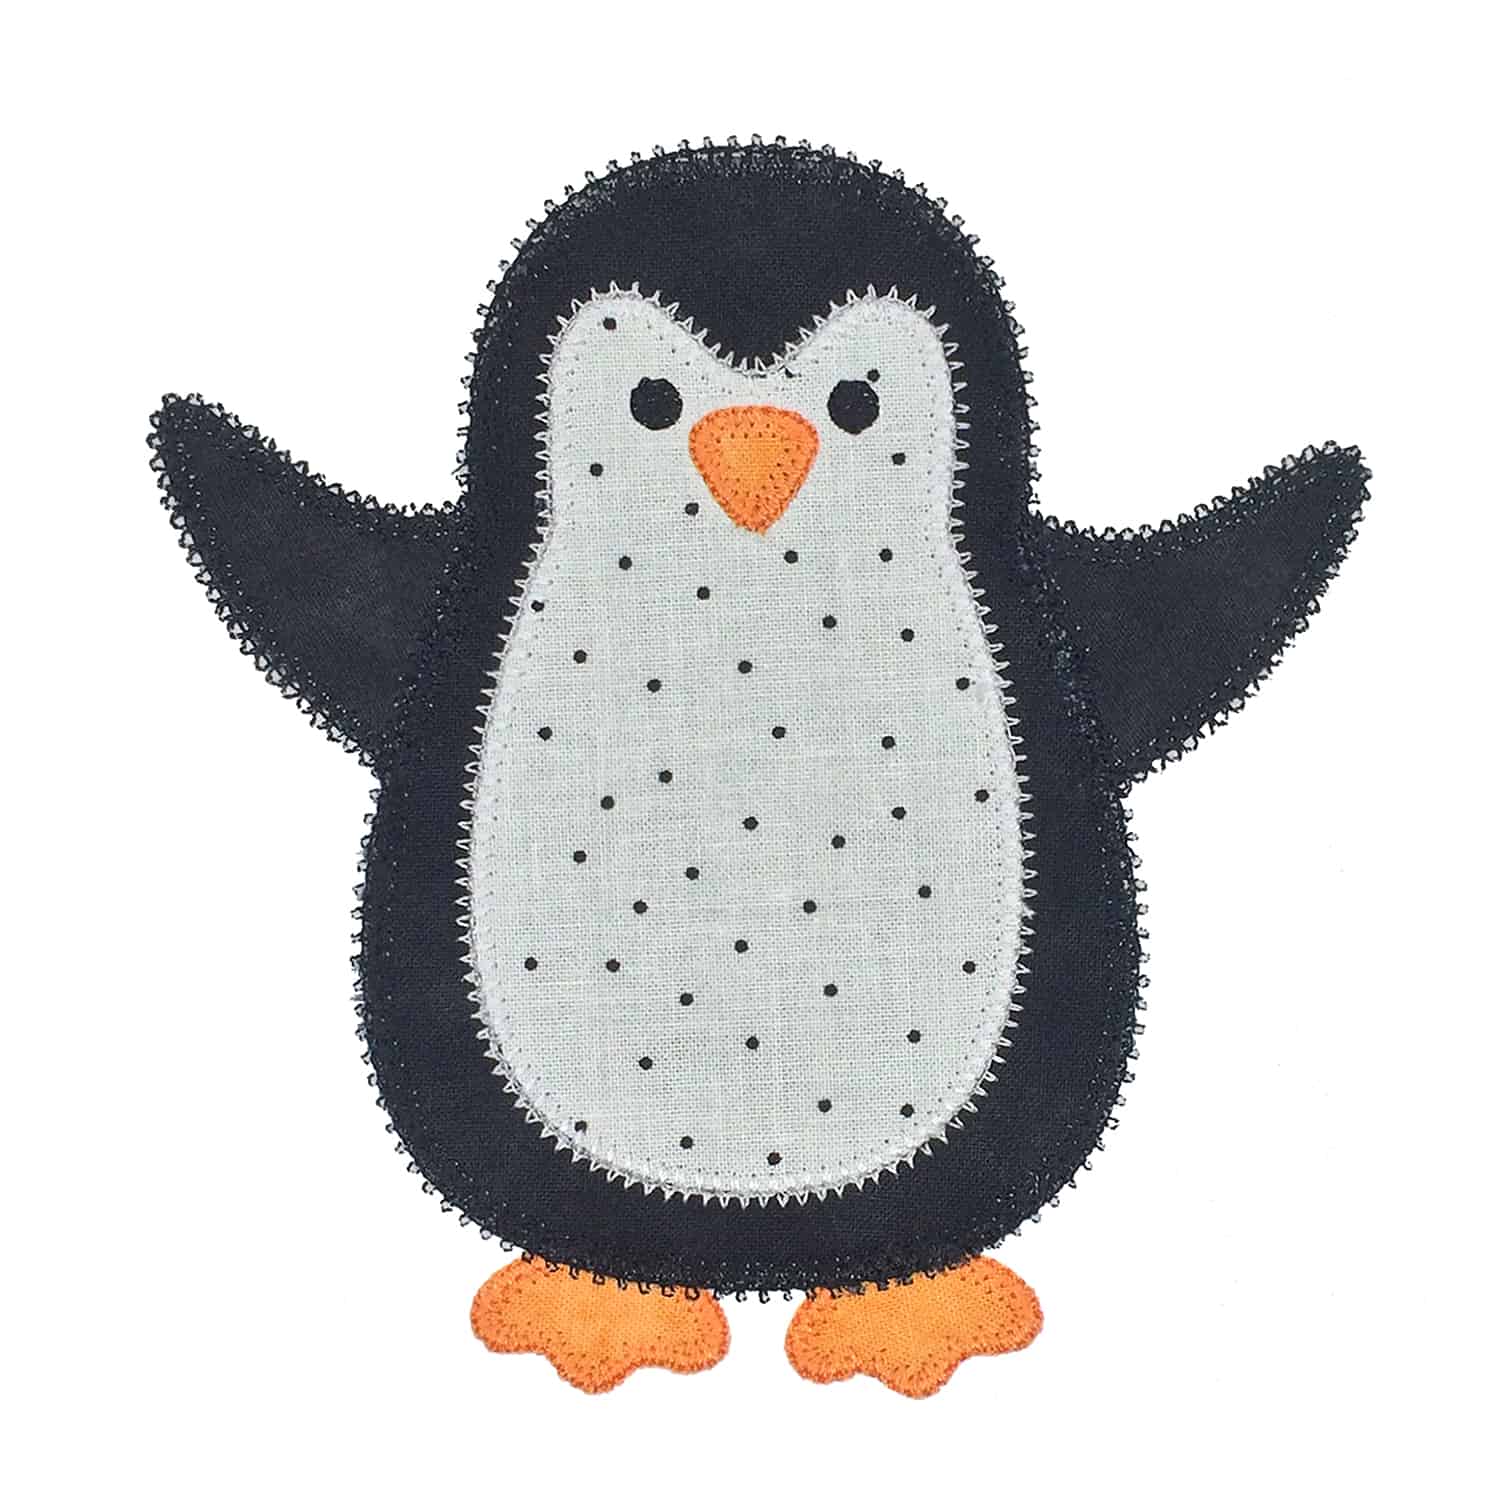 go! penguin set embroidery patterns by v stitch designs